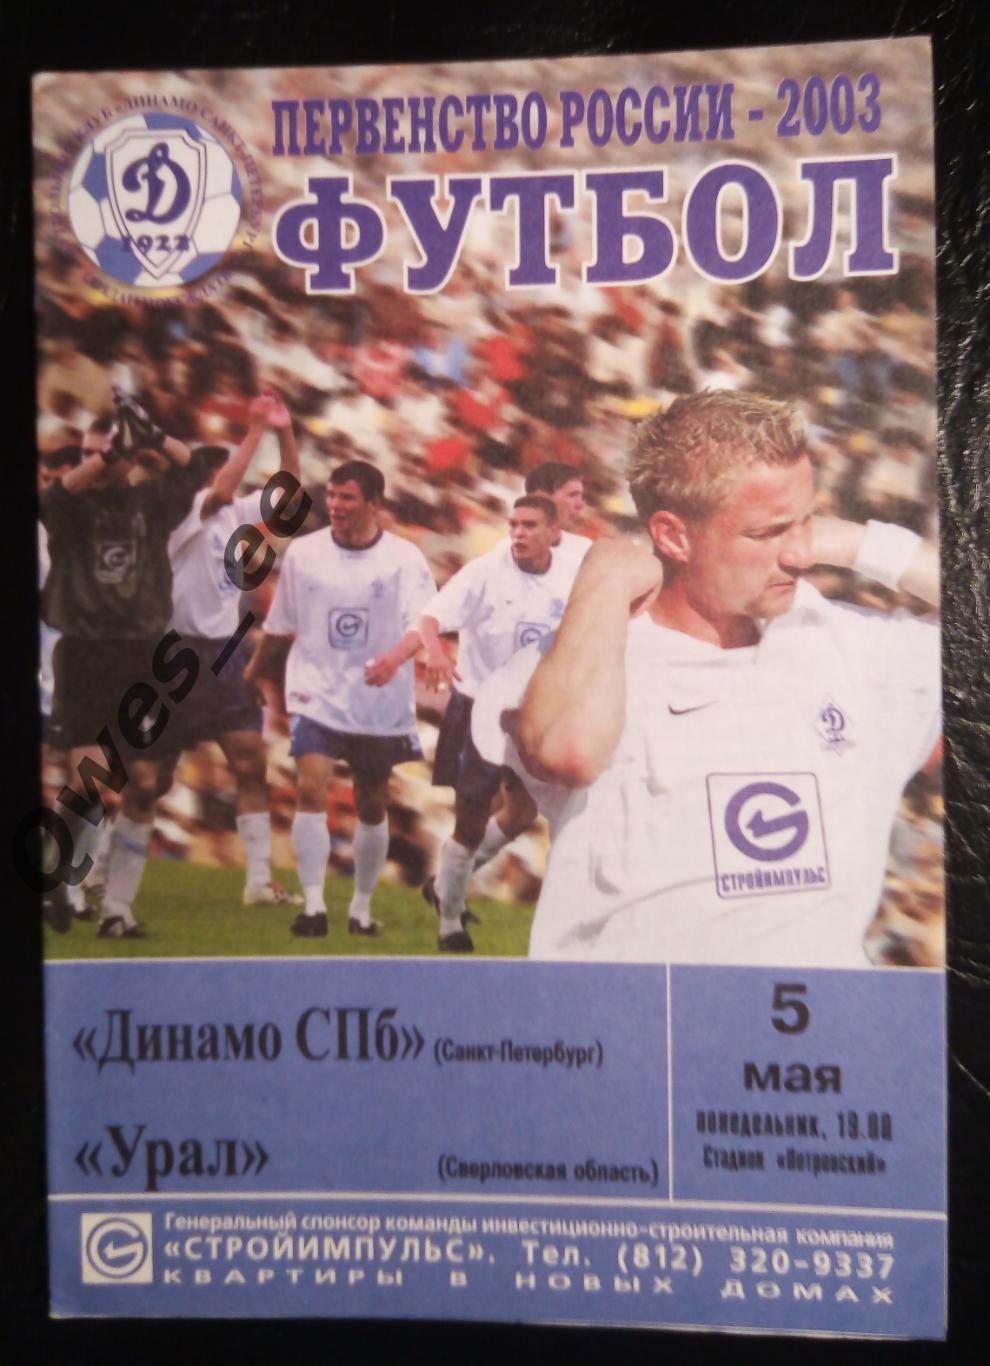 Динамо Санкт Петербург - Урал Екатеринбург 5 мая 2003